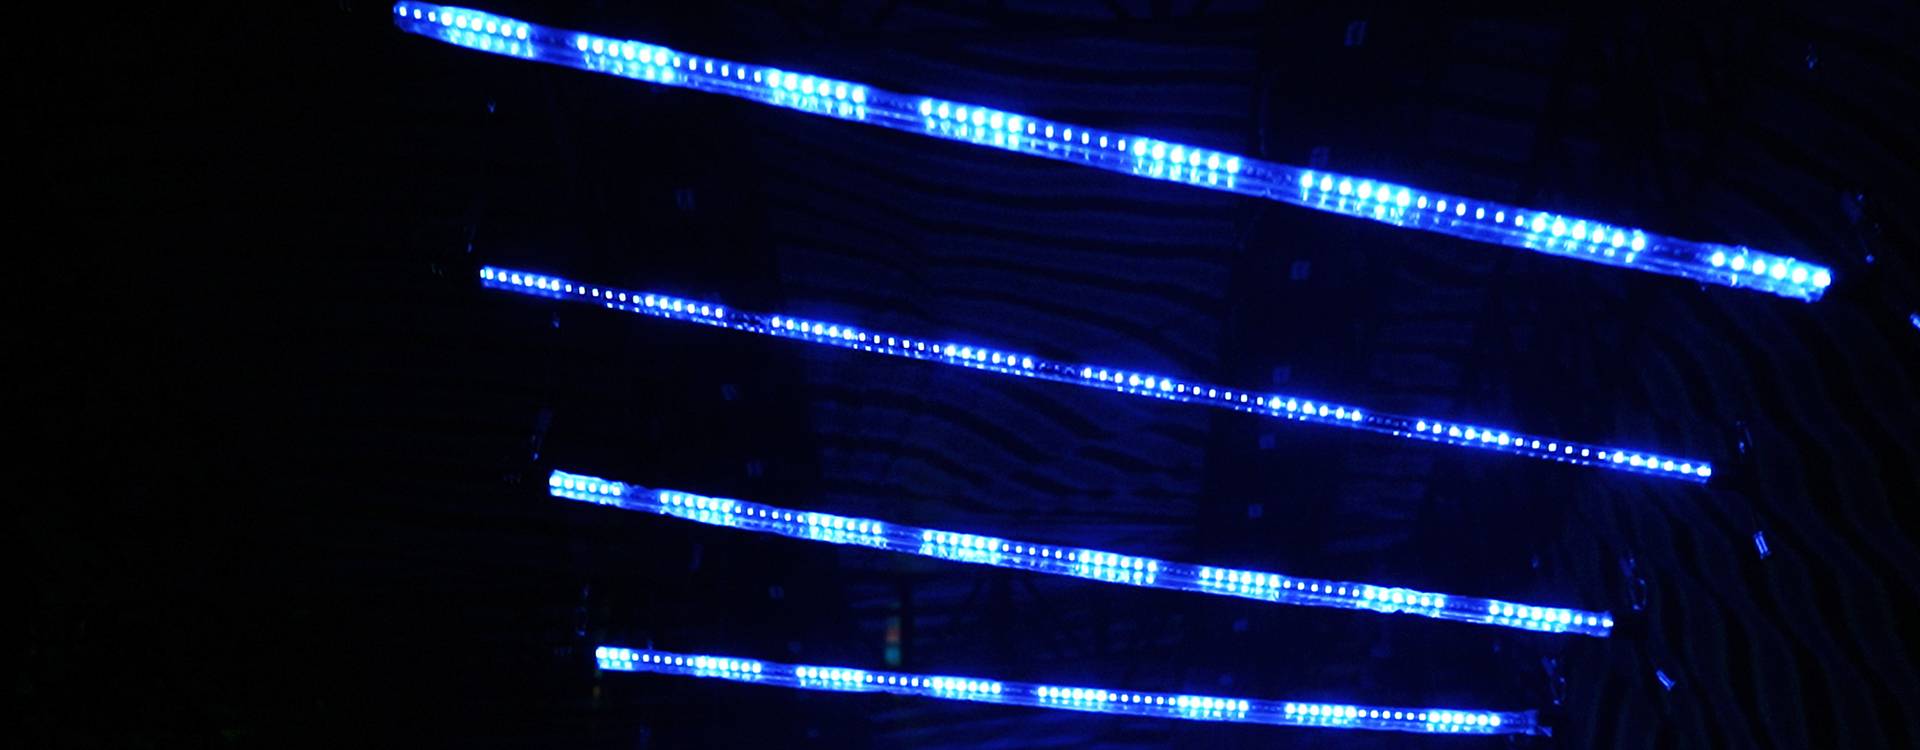 Хати пикселии кинетикии LED (2)